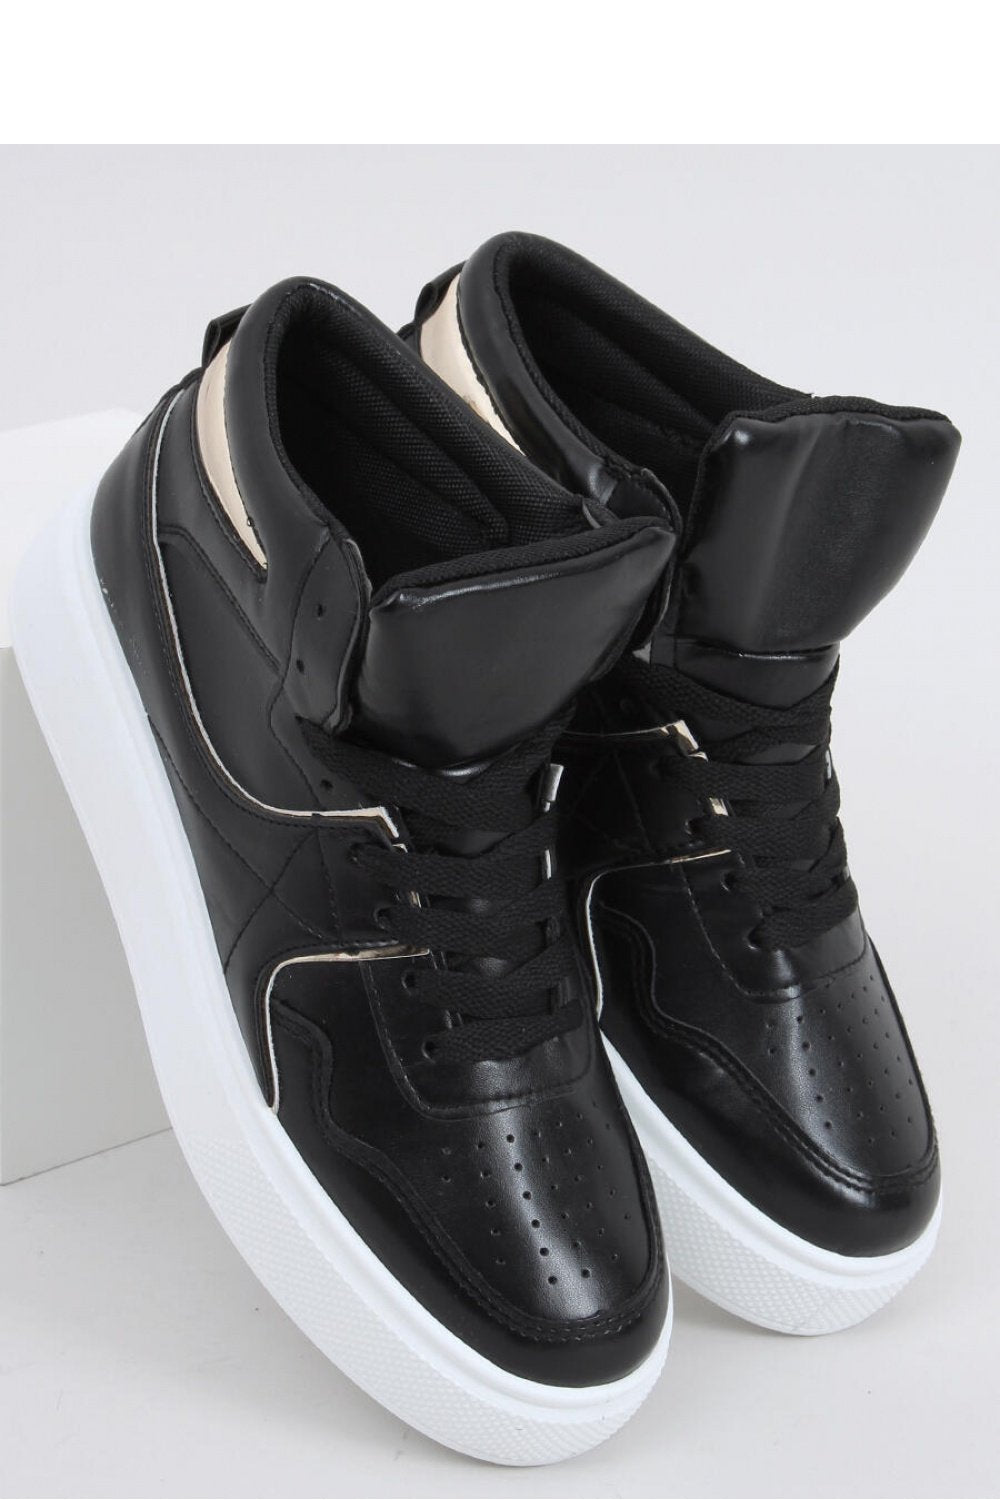 Sport Shoes model 162892 Inello Posh Styles Apparel